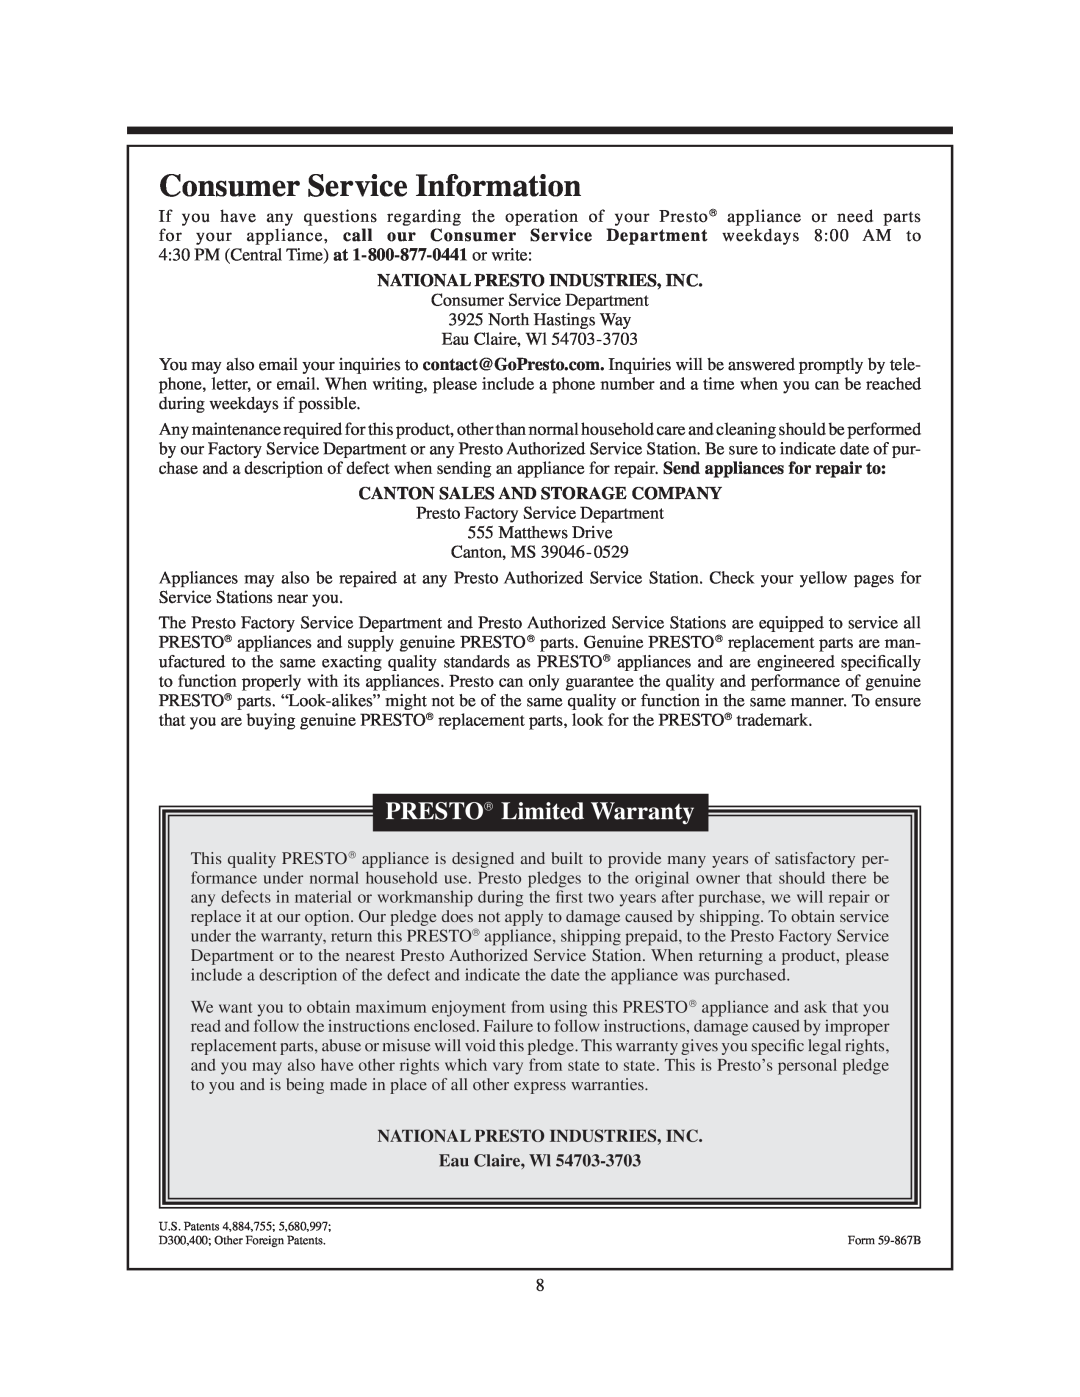 Presto electric slicer-shredder Consumer Service Information, National Presto Industries, Inc, PRESTO Limited Warranty 